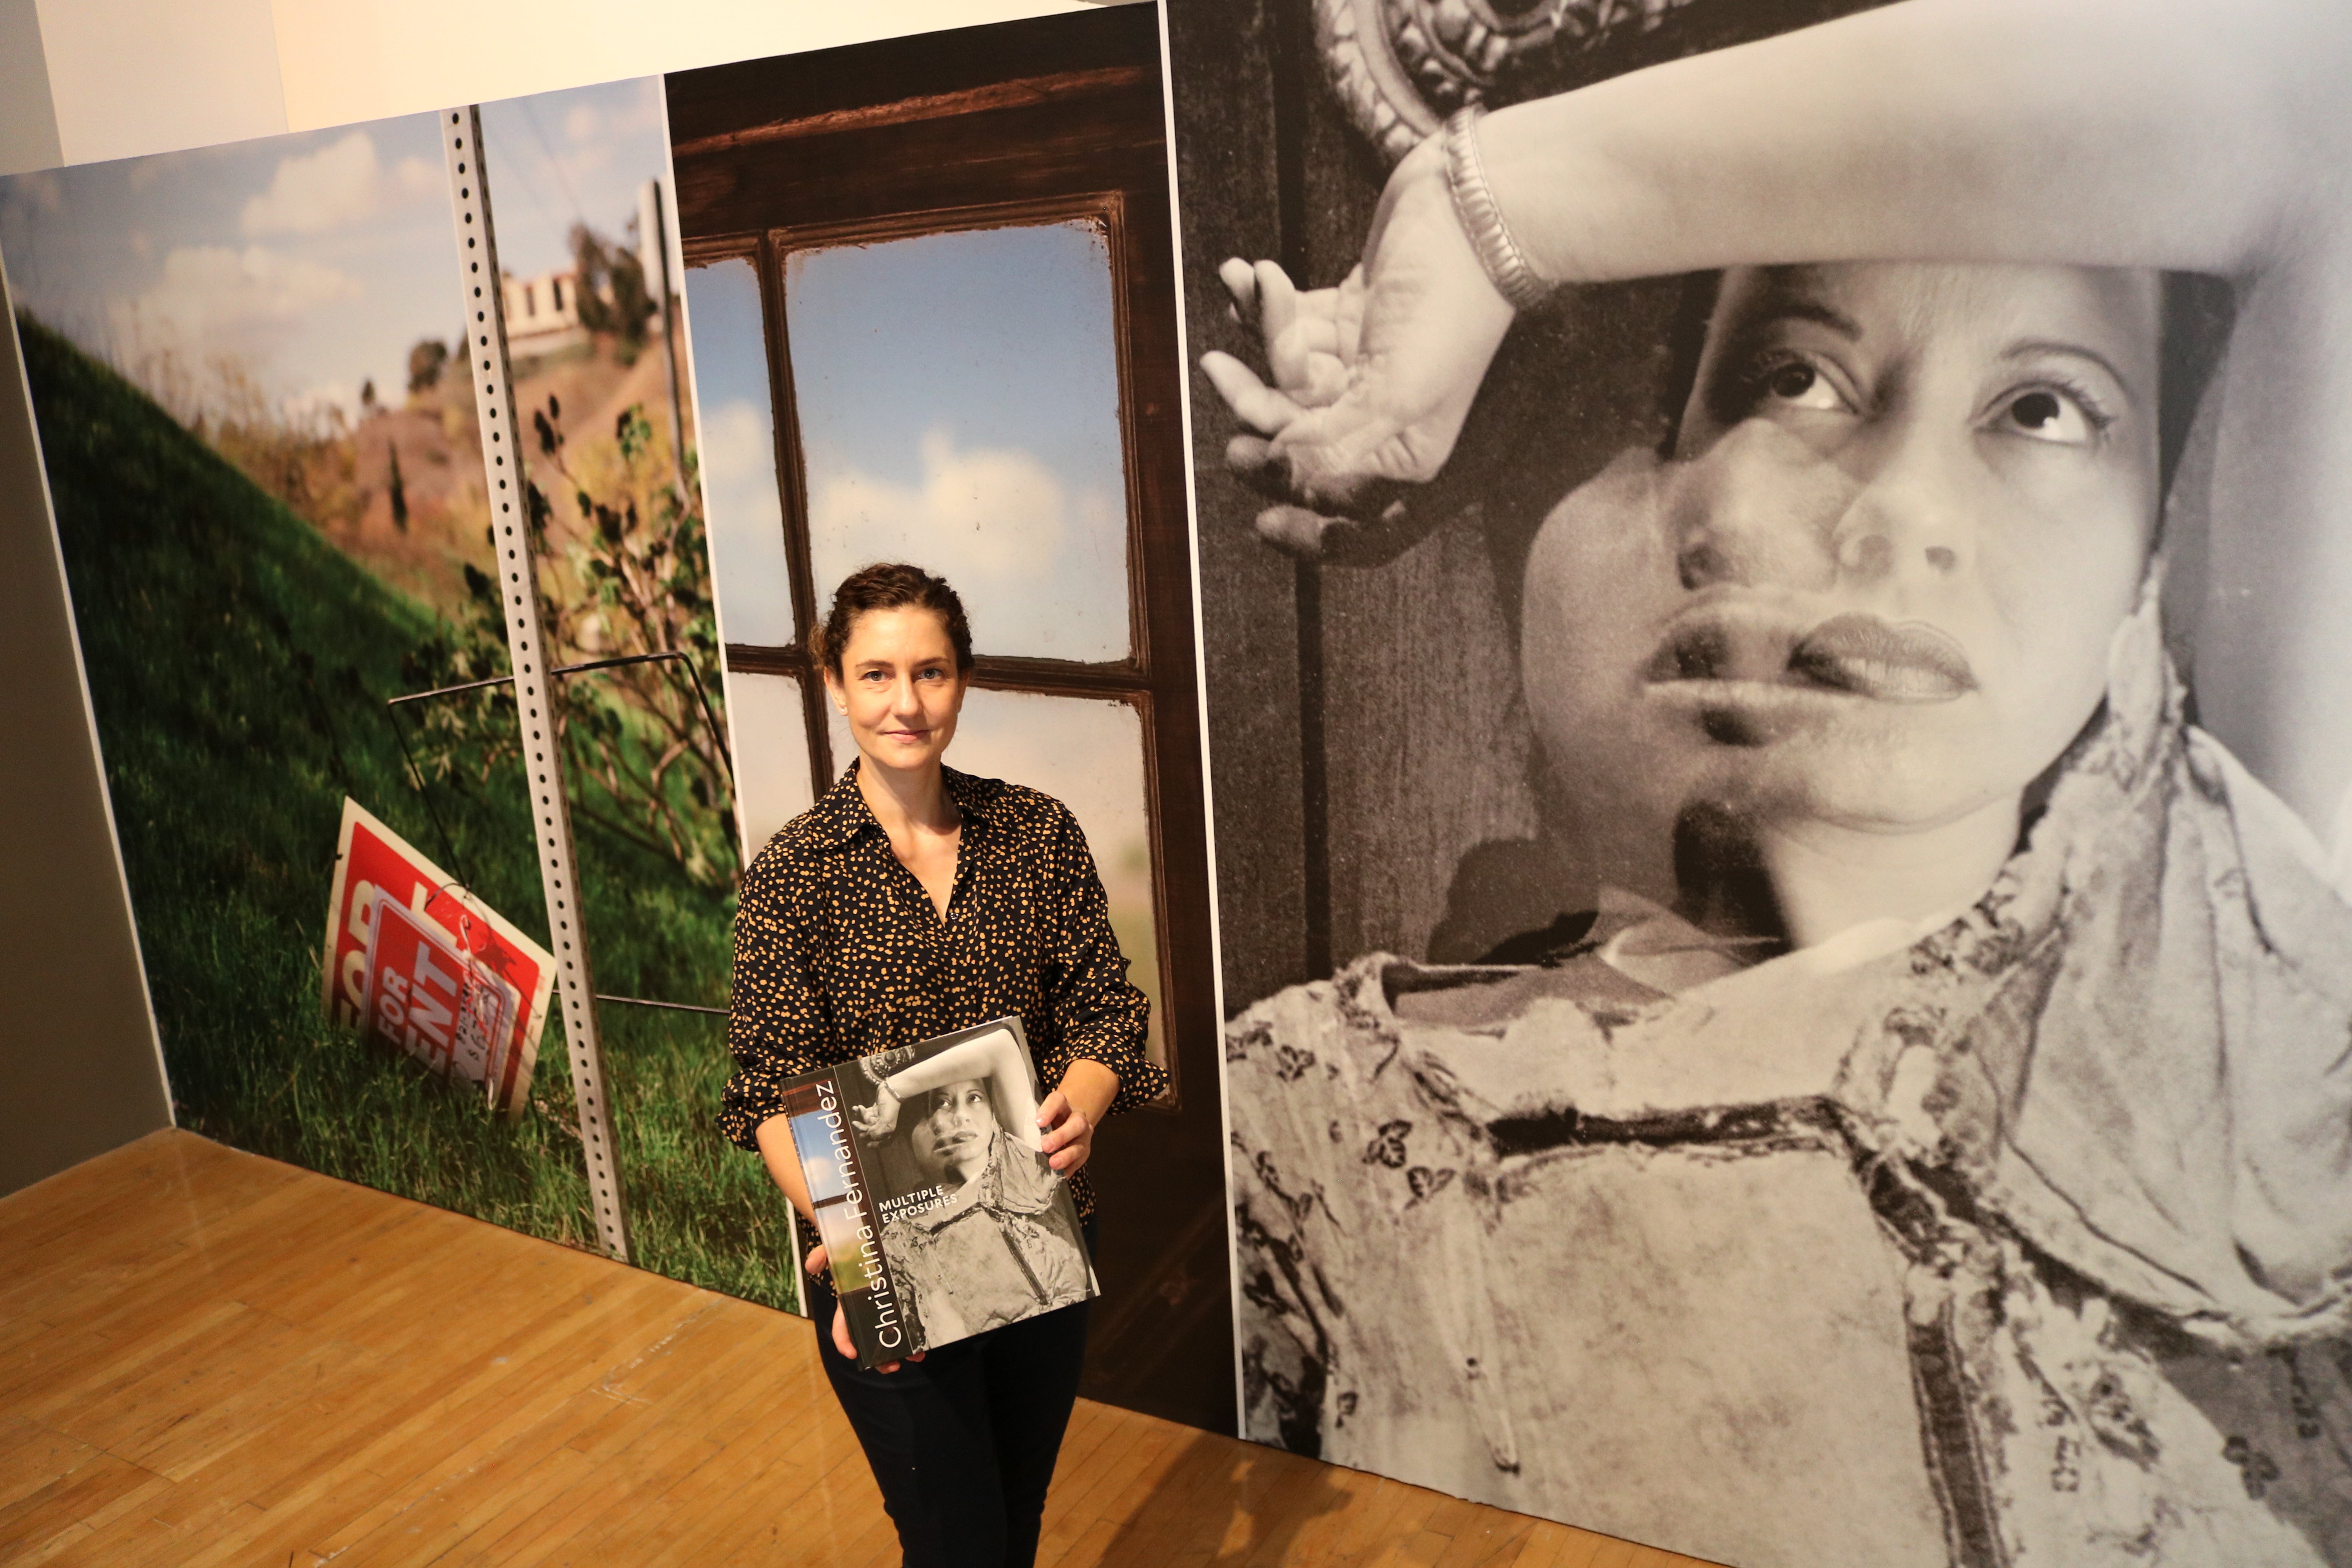 UCR ARTS: Christina Fernandez’s photo exhibition captures life